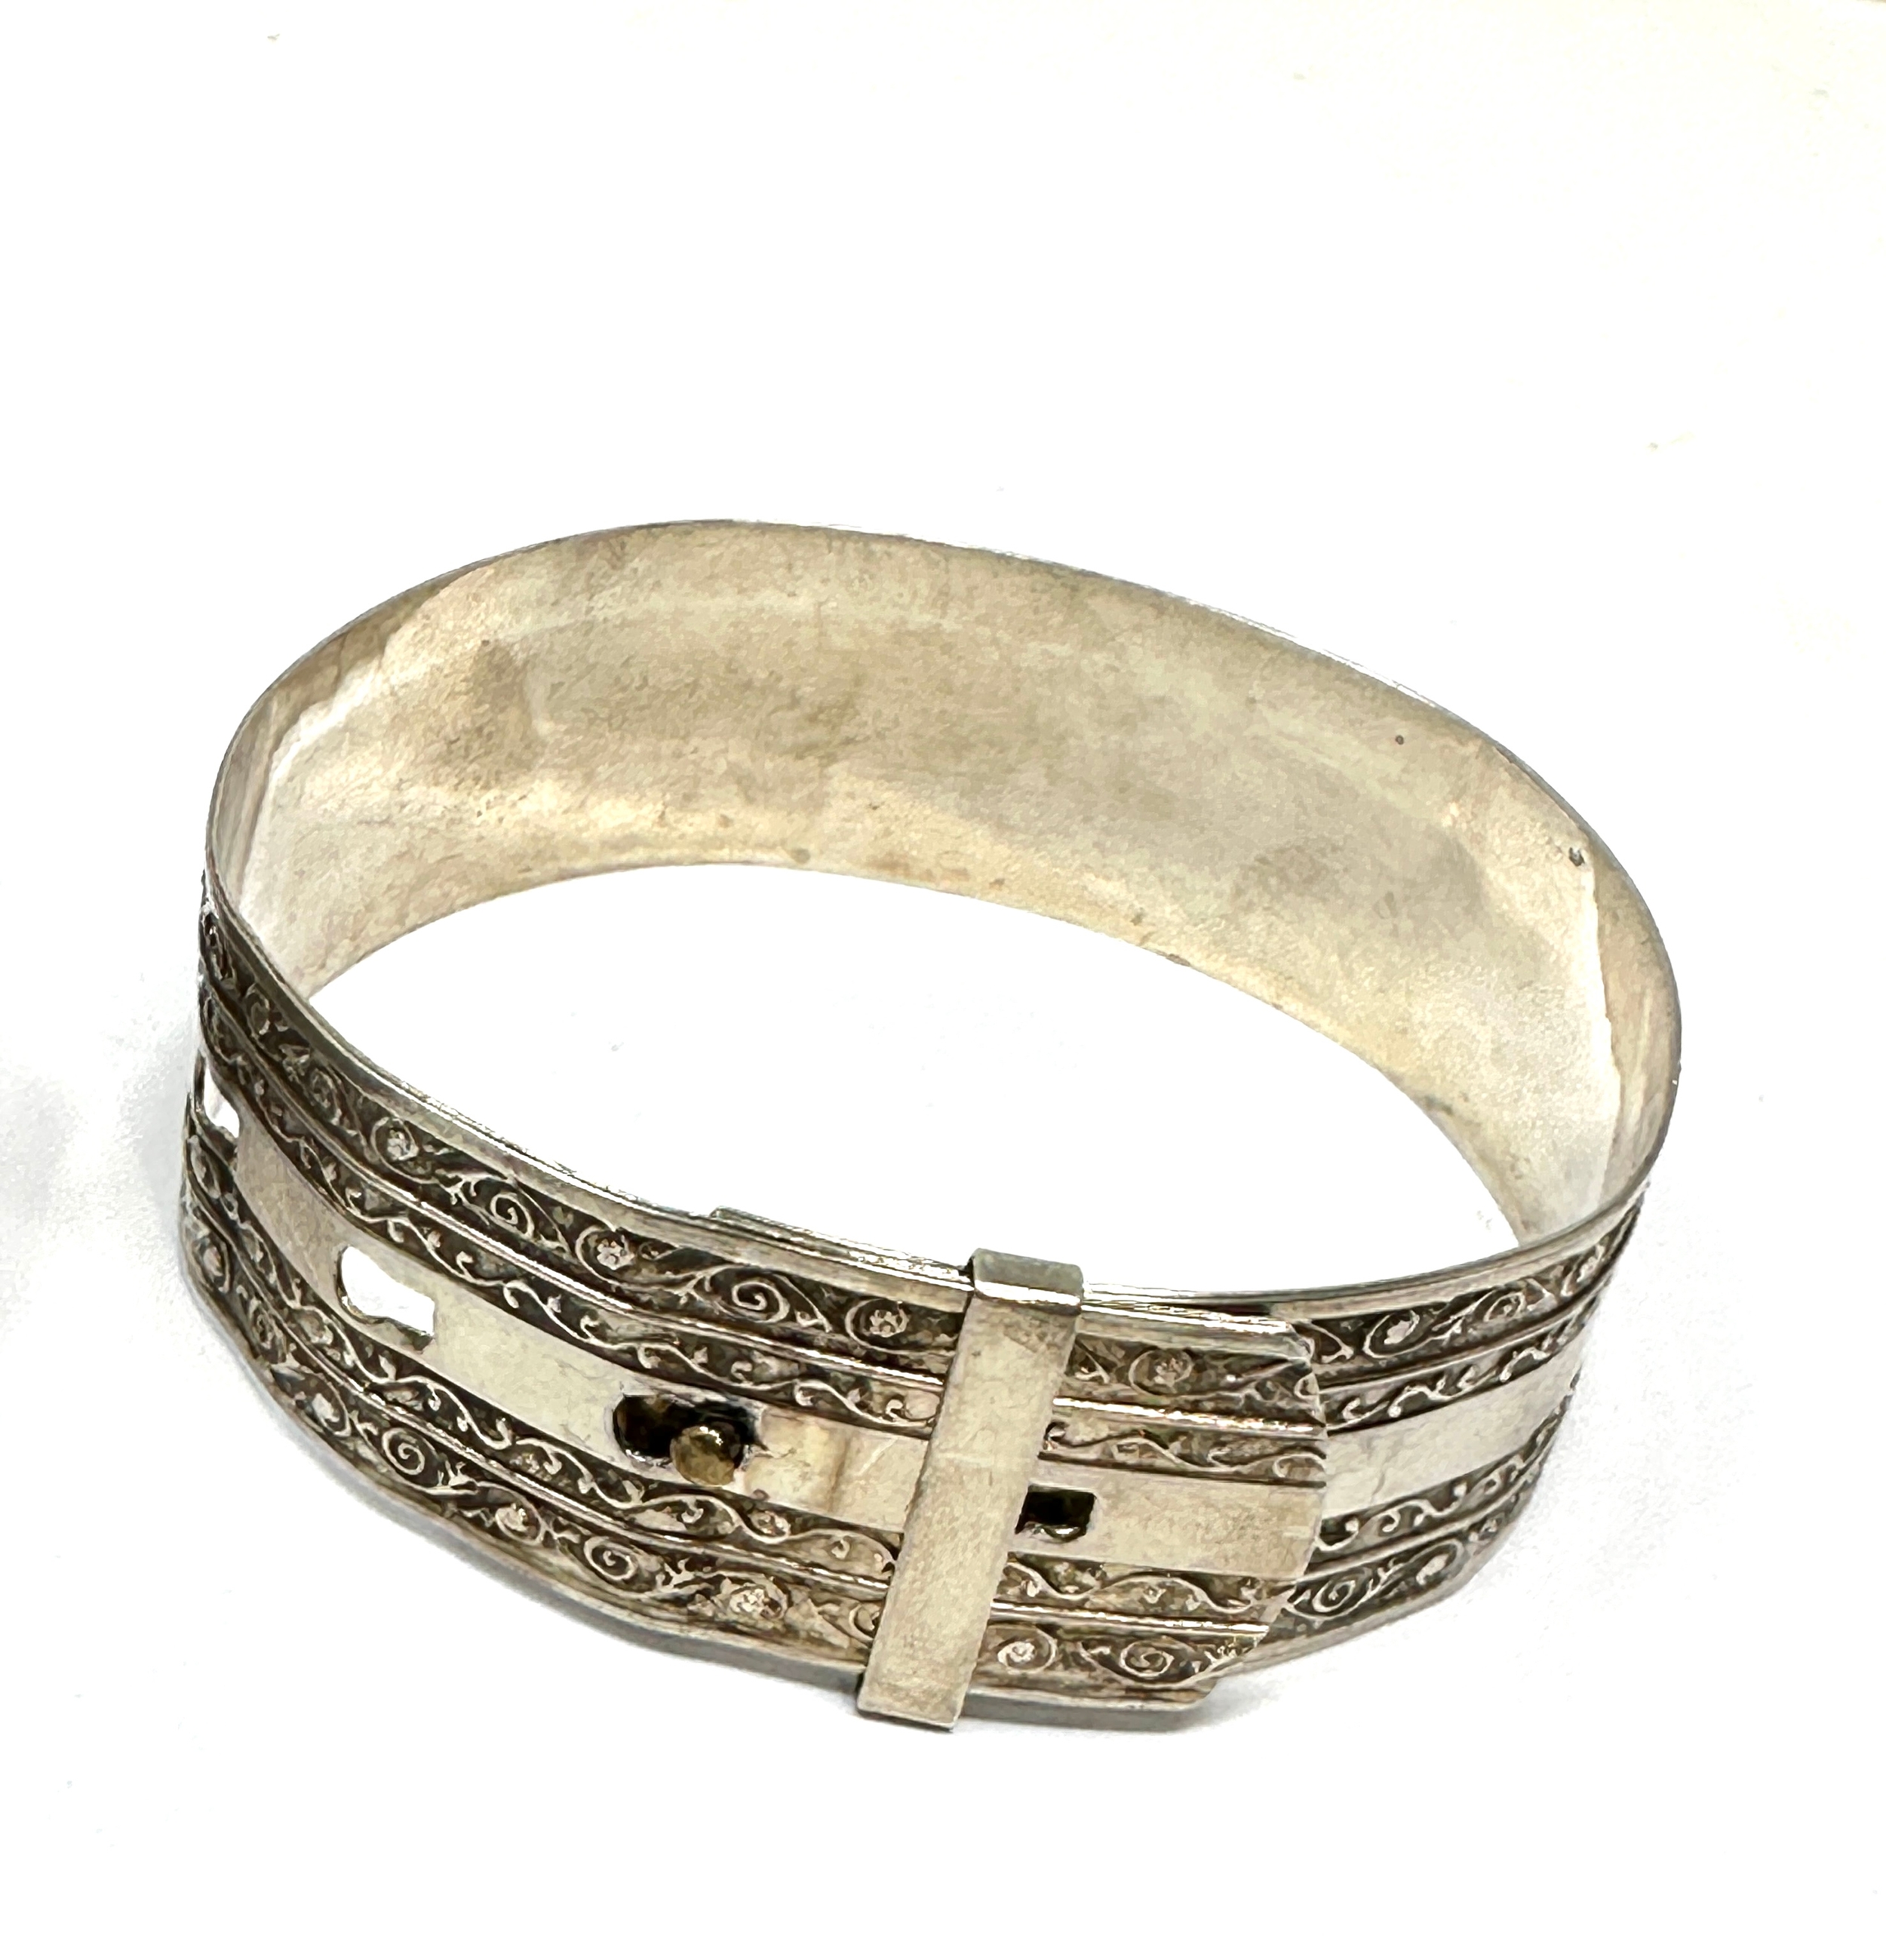 Selection of 4 vintage silver bangles & bracelets weight 90g - Image 5 of 5